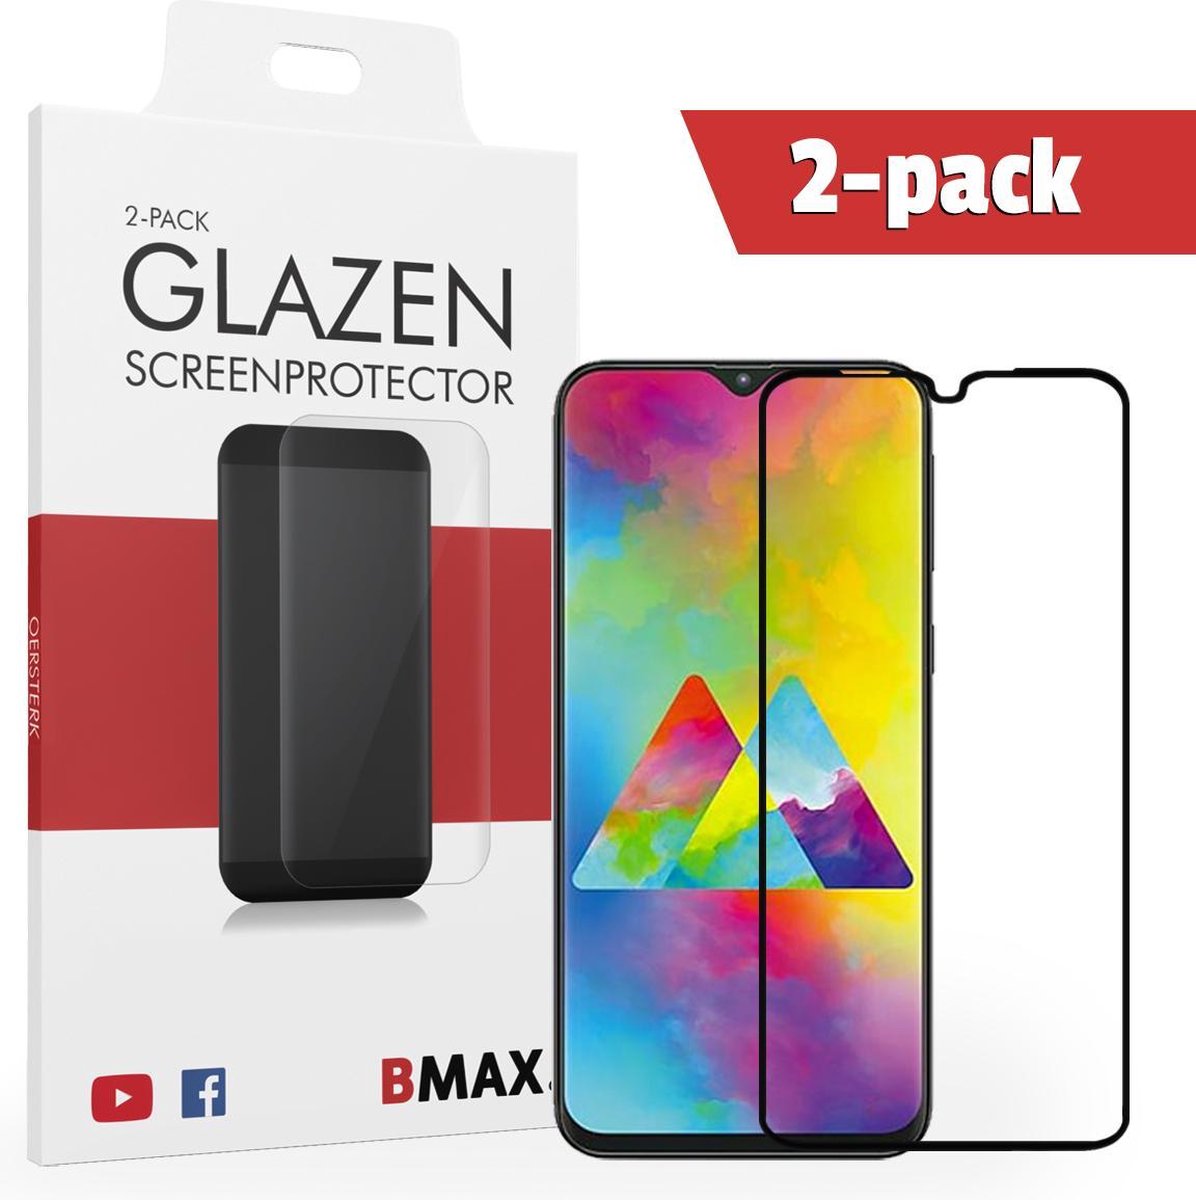 2-pack Bmax Samsung Galaxy M20 Power Screenprotector - Glass - Full Cover 2.5d - Black